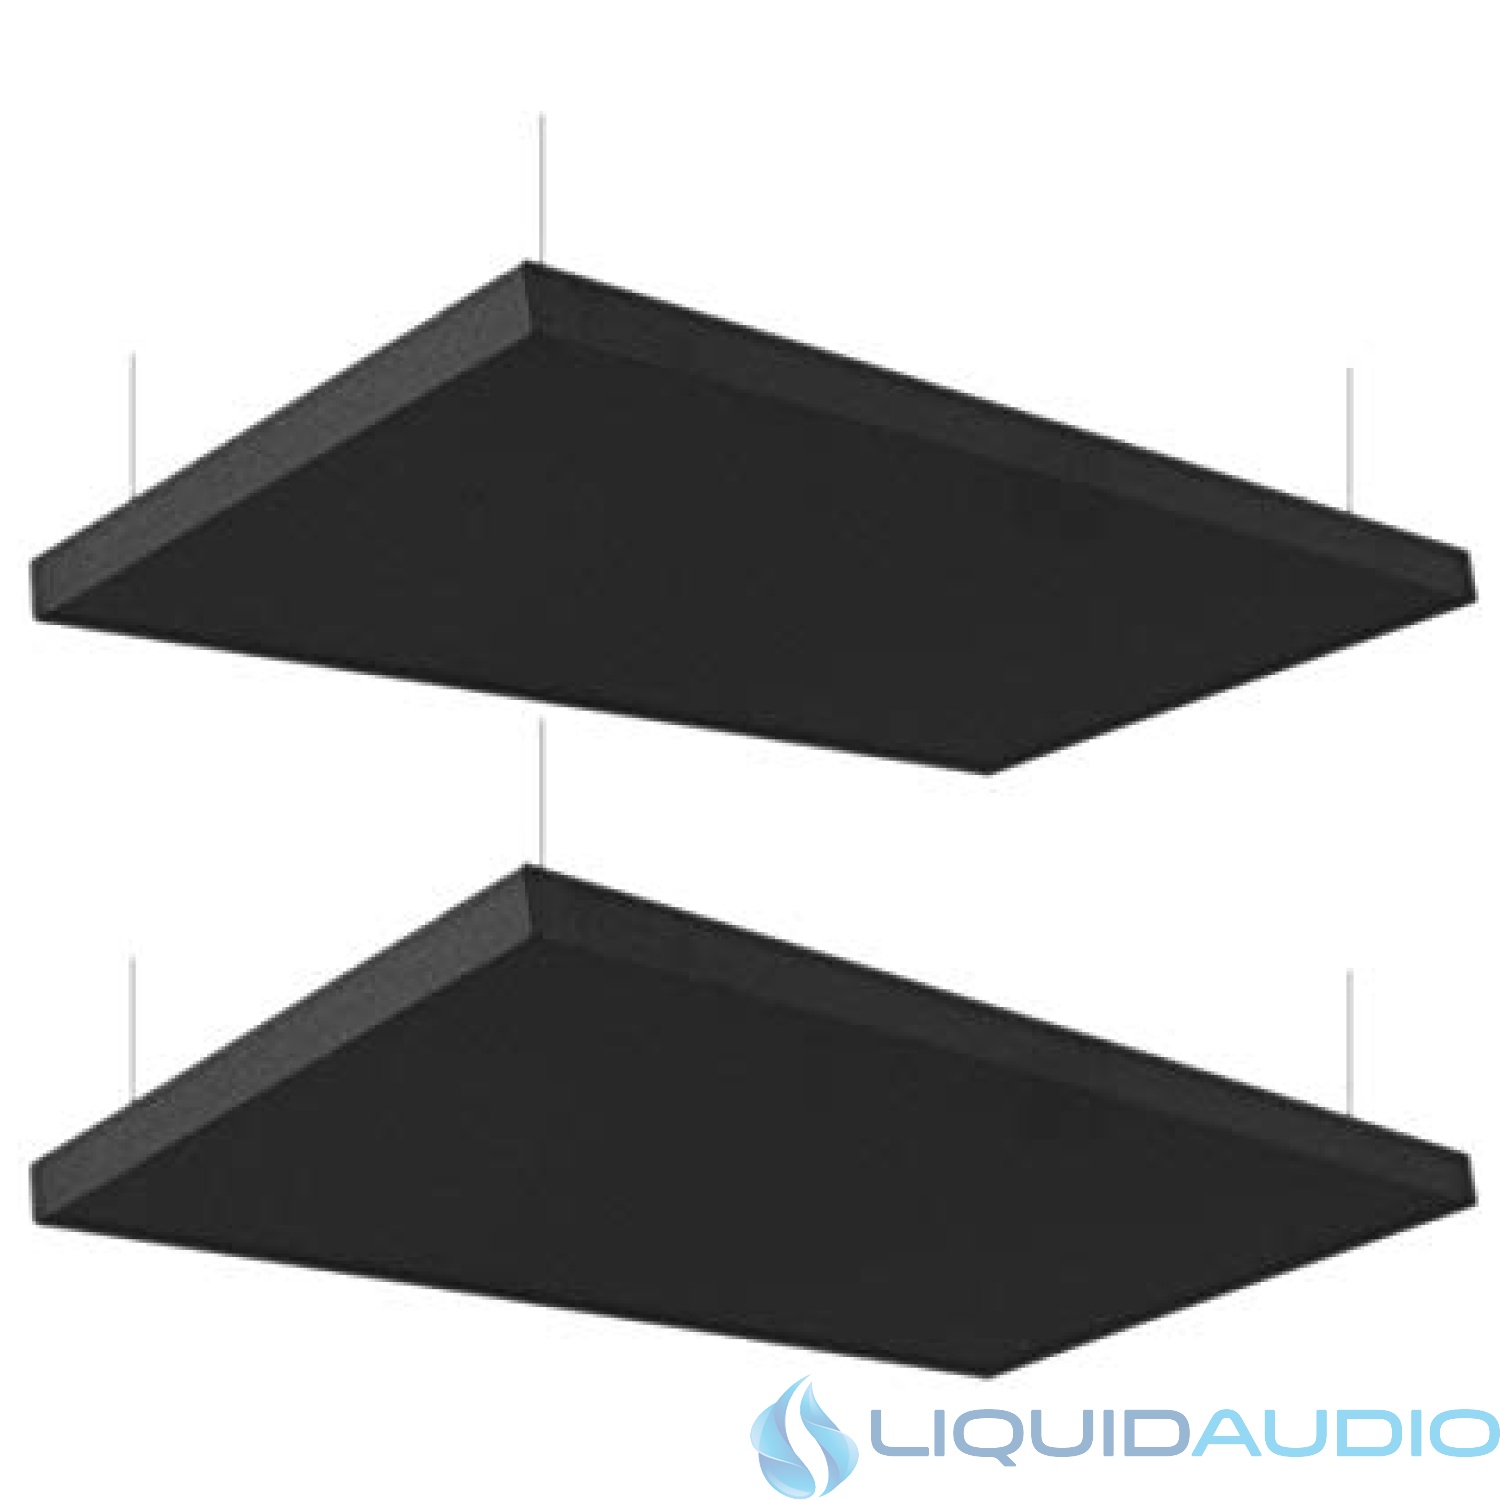 Primacoustic 1.5 inch Nimbus 2 x 4 foot Acoustic Ceiling Cloud Panel - Black (2-pack)